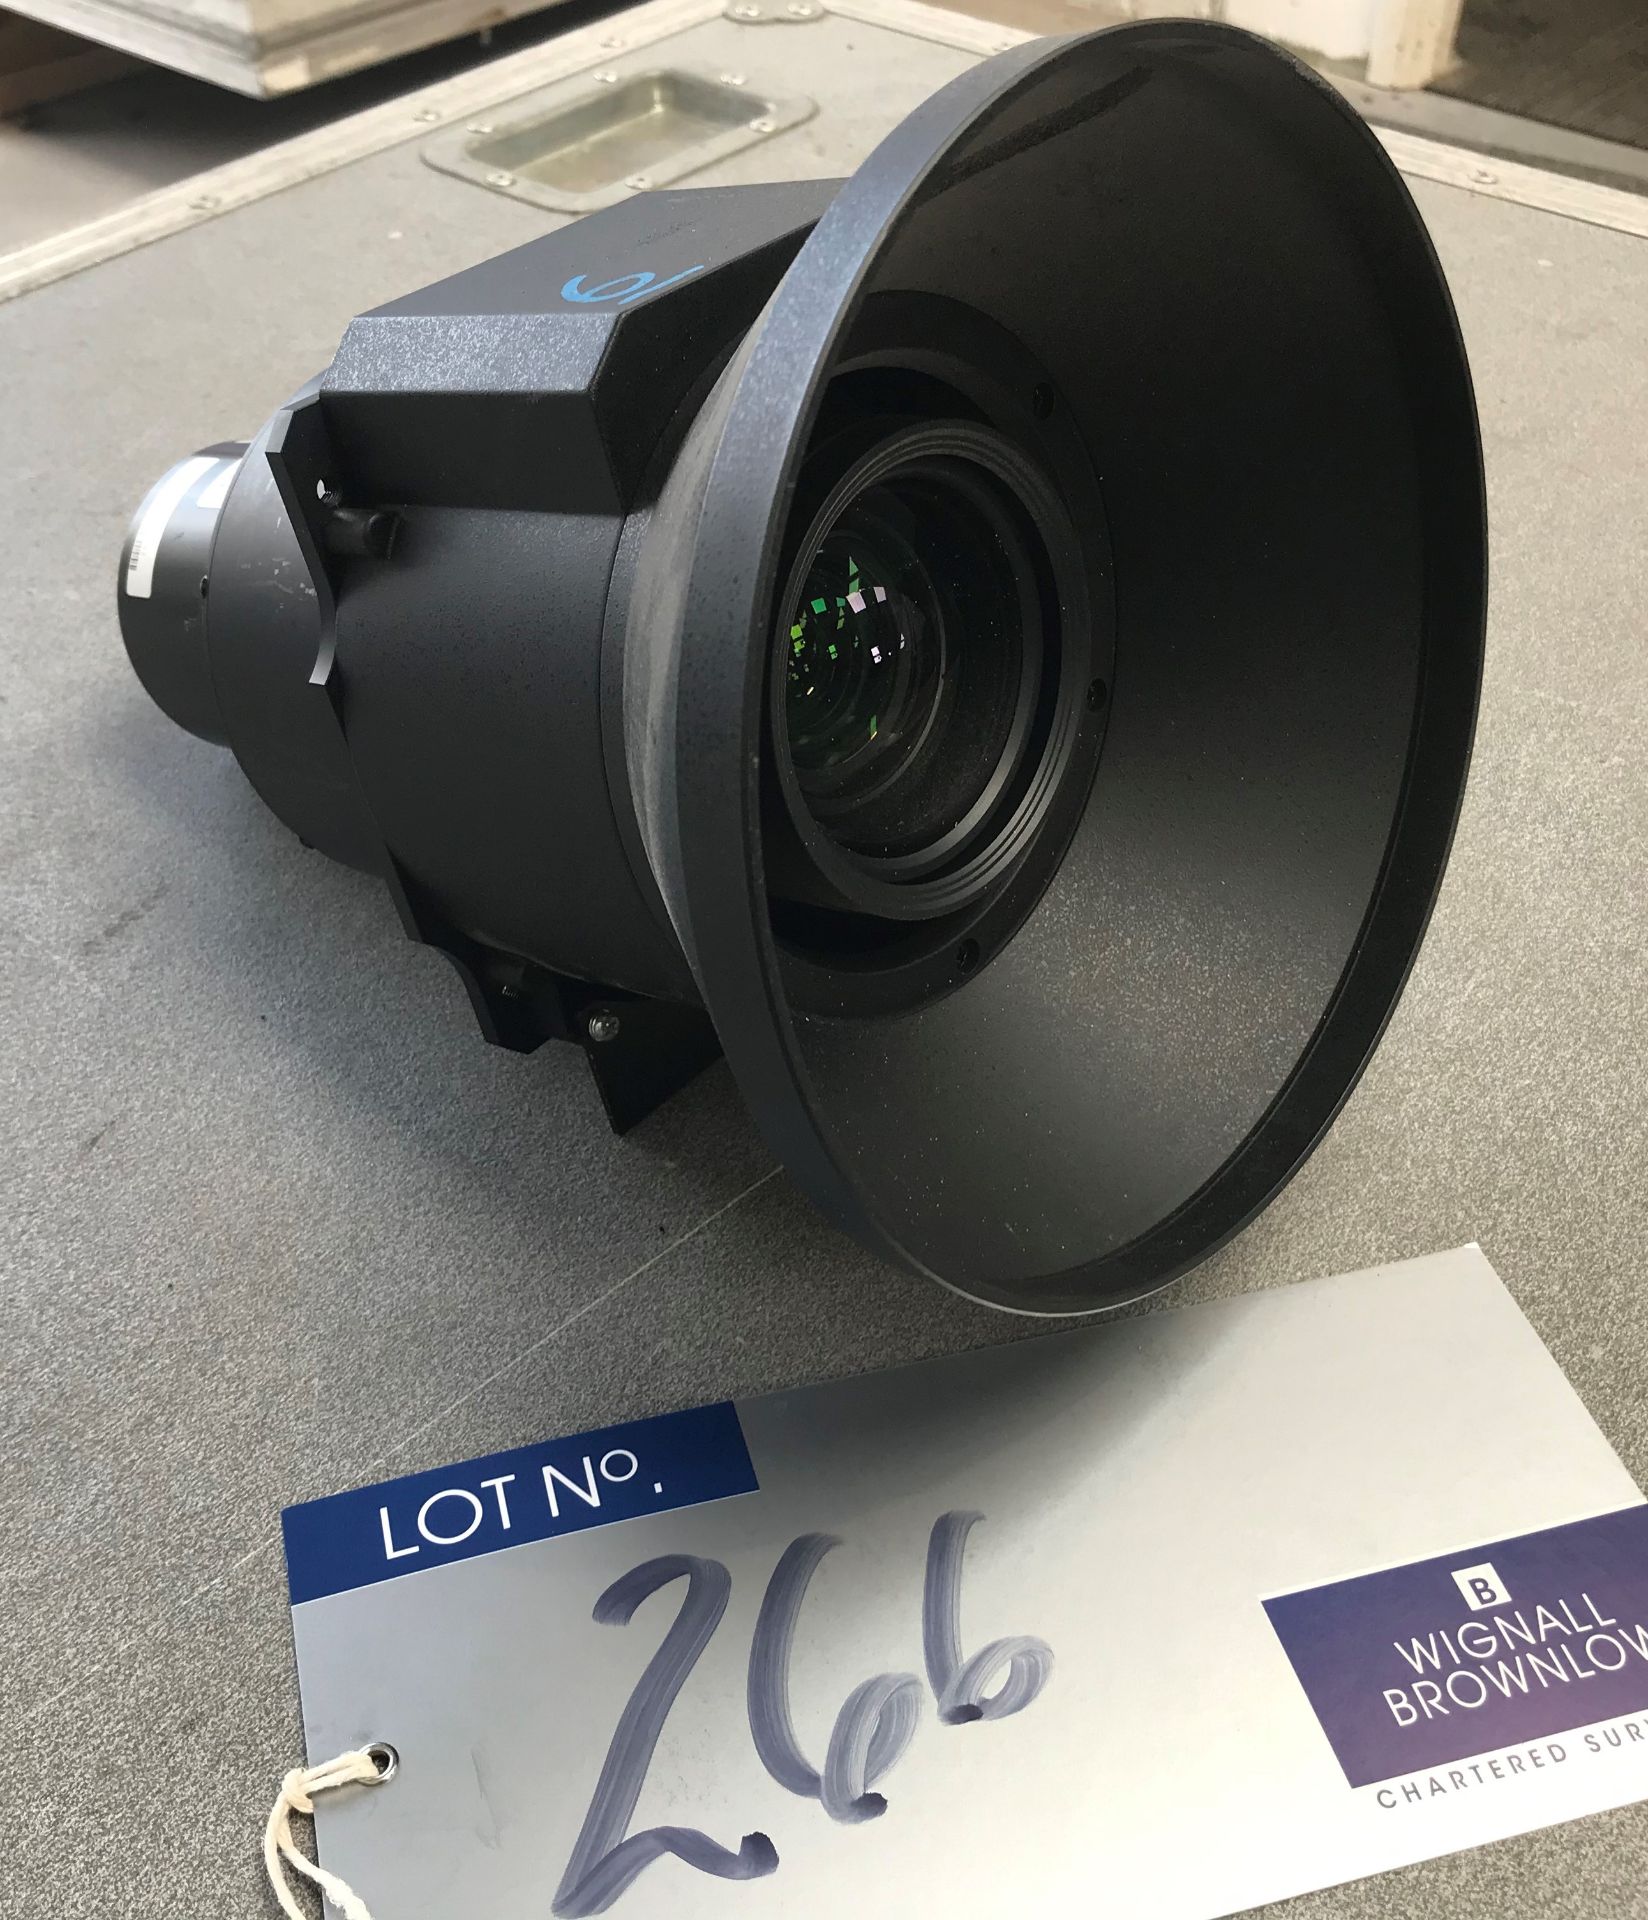 A Barco BPS P LNS RLD (01.6-1.8) BPS Mercury XGA DLP Projector Zoom Lens with flight case (located